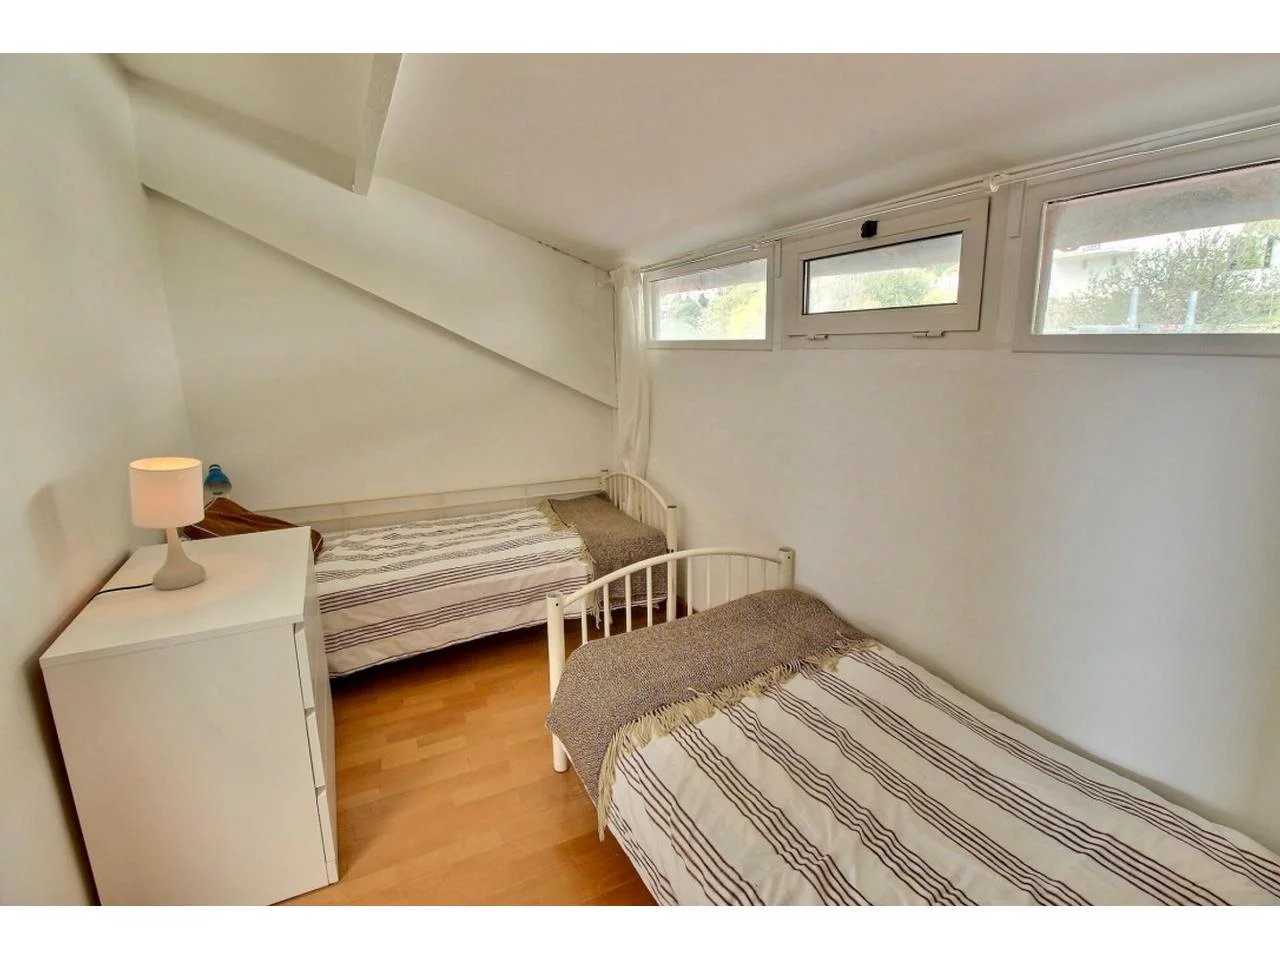 Appartement  2 Locali 45.33m2  In vendita   424 000 €